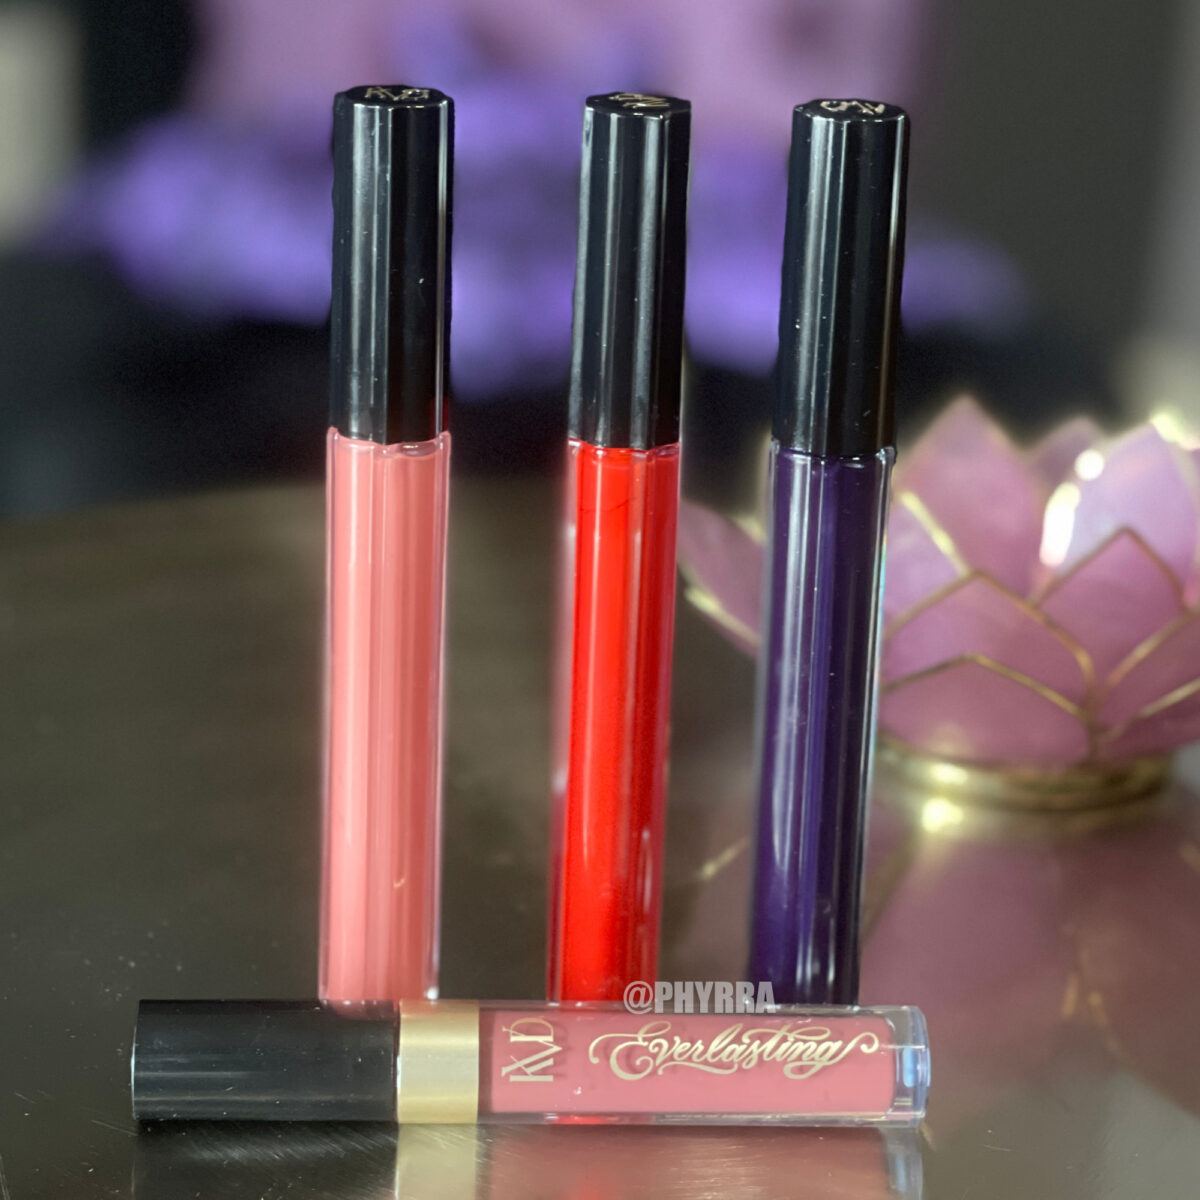 KVD Everlasting Hyperlight Liquid Lipstick Review and Swatches